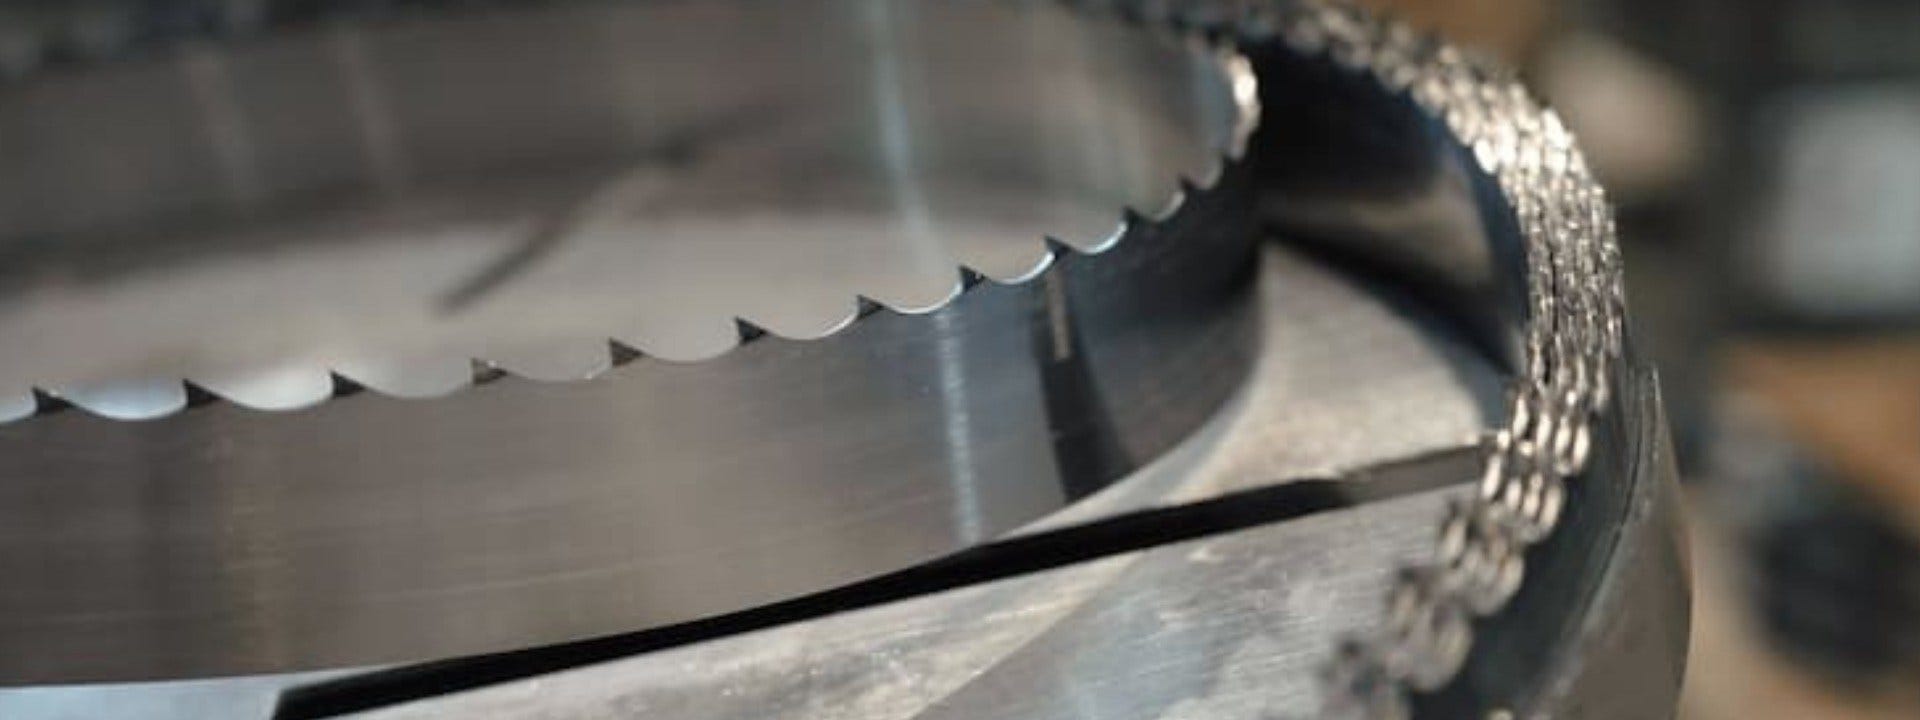 Sawmiller's best choice - the original blades from Wood-Mizer